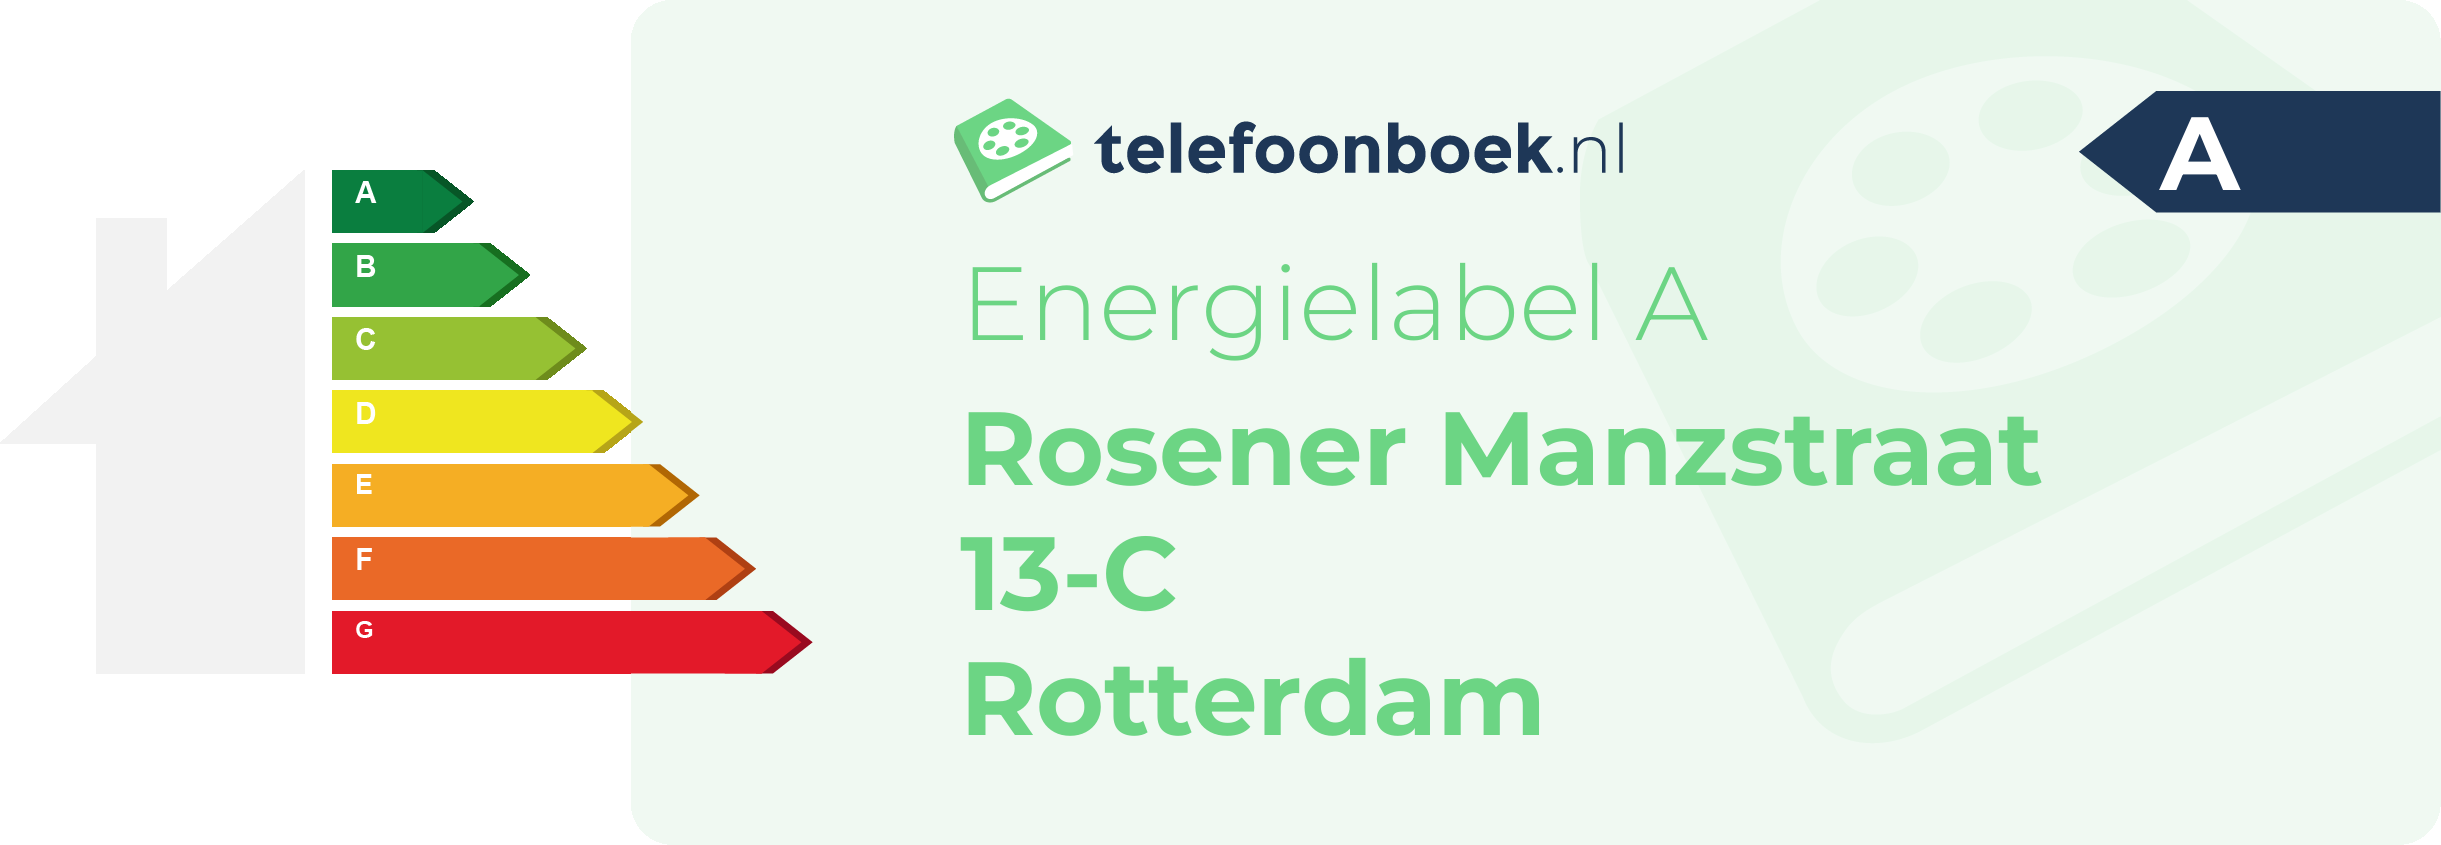 Energielabel Rosener Manzstraat 13-C Rotterdam